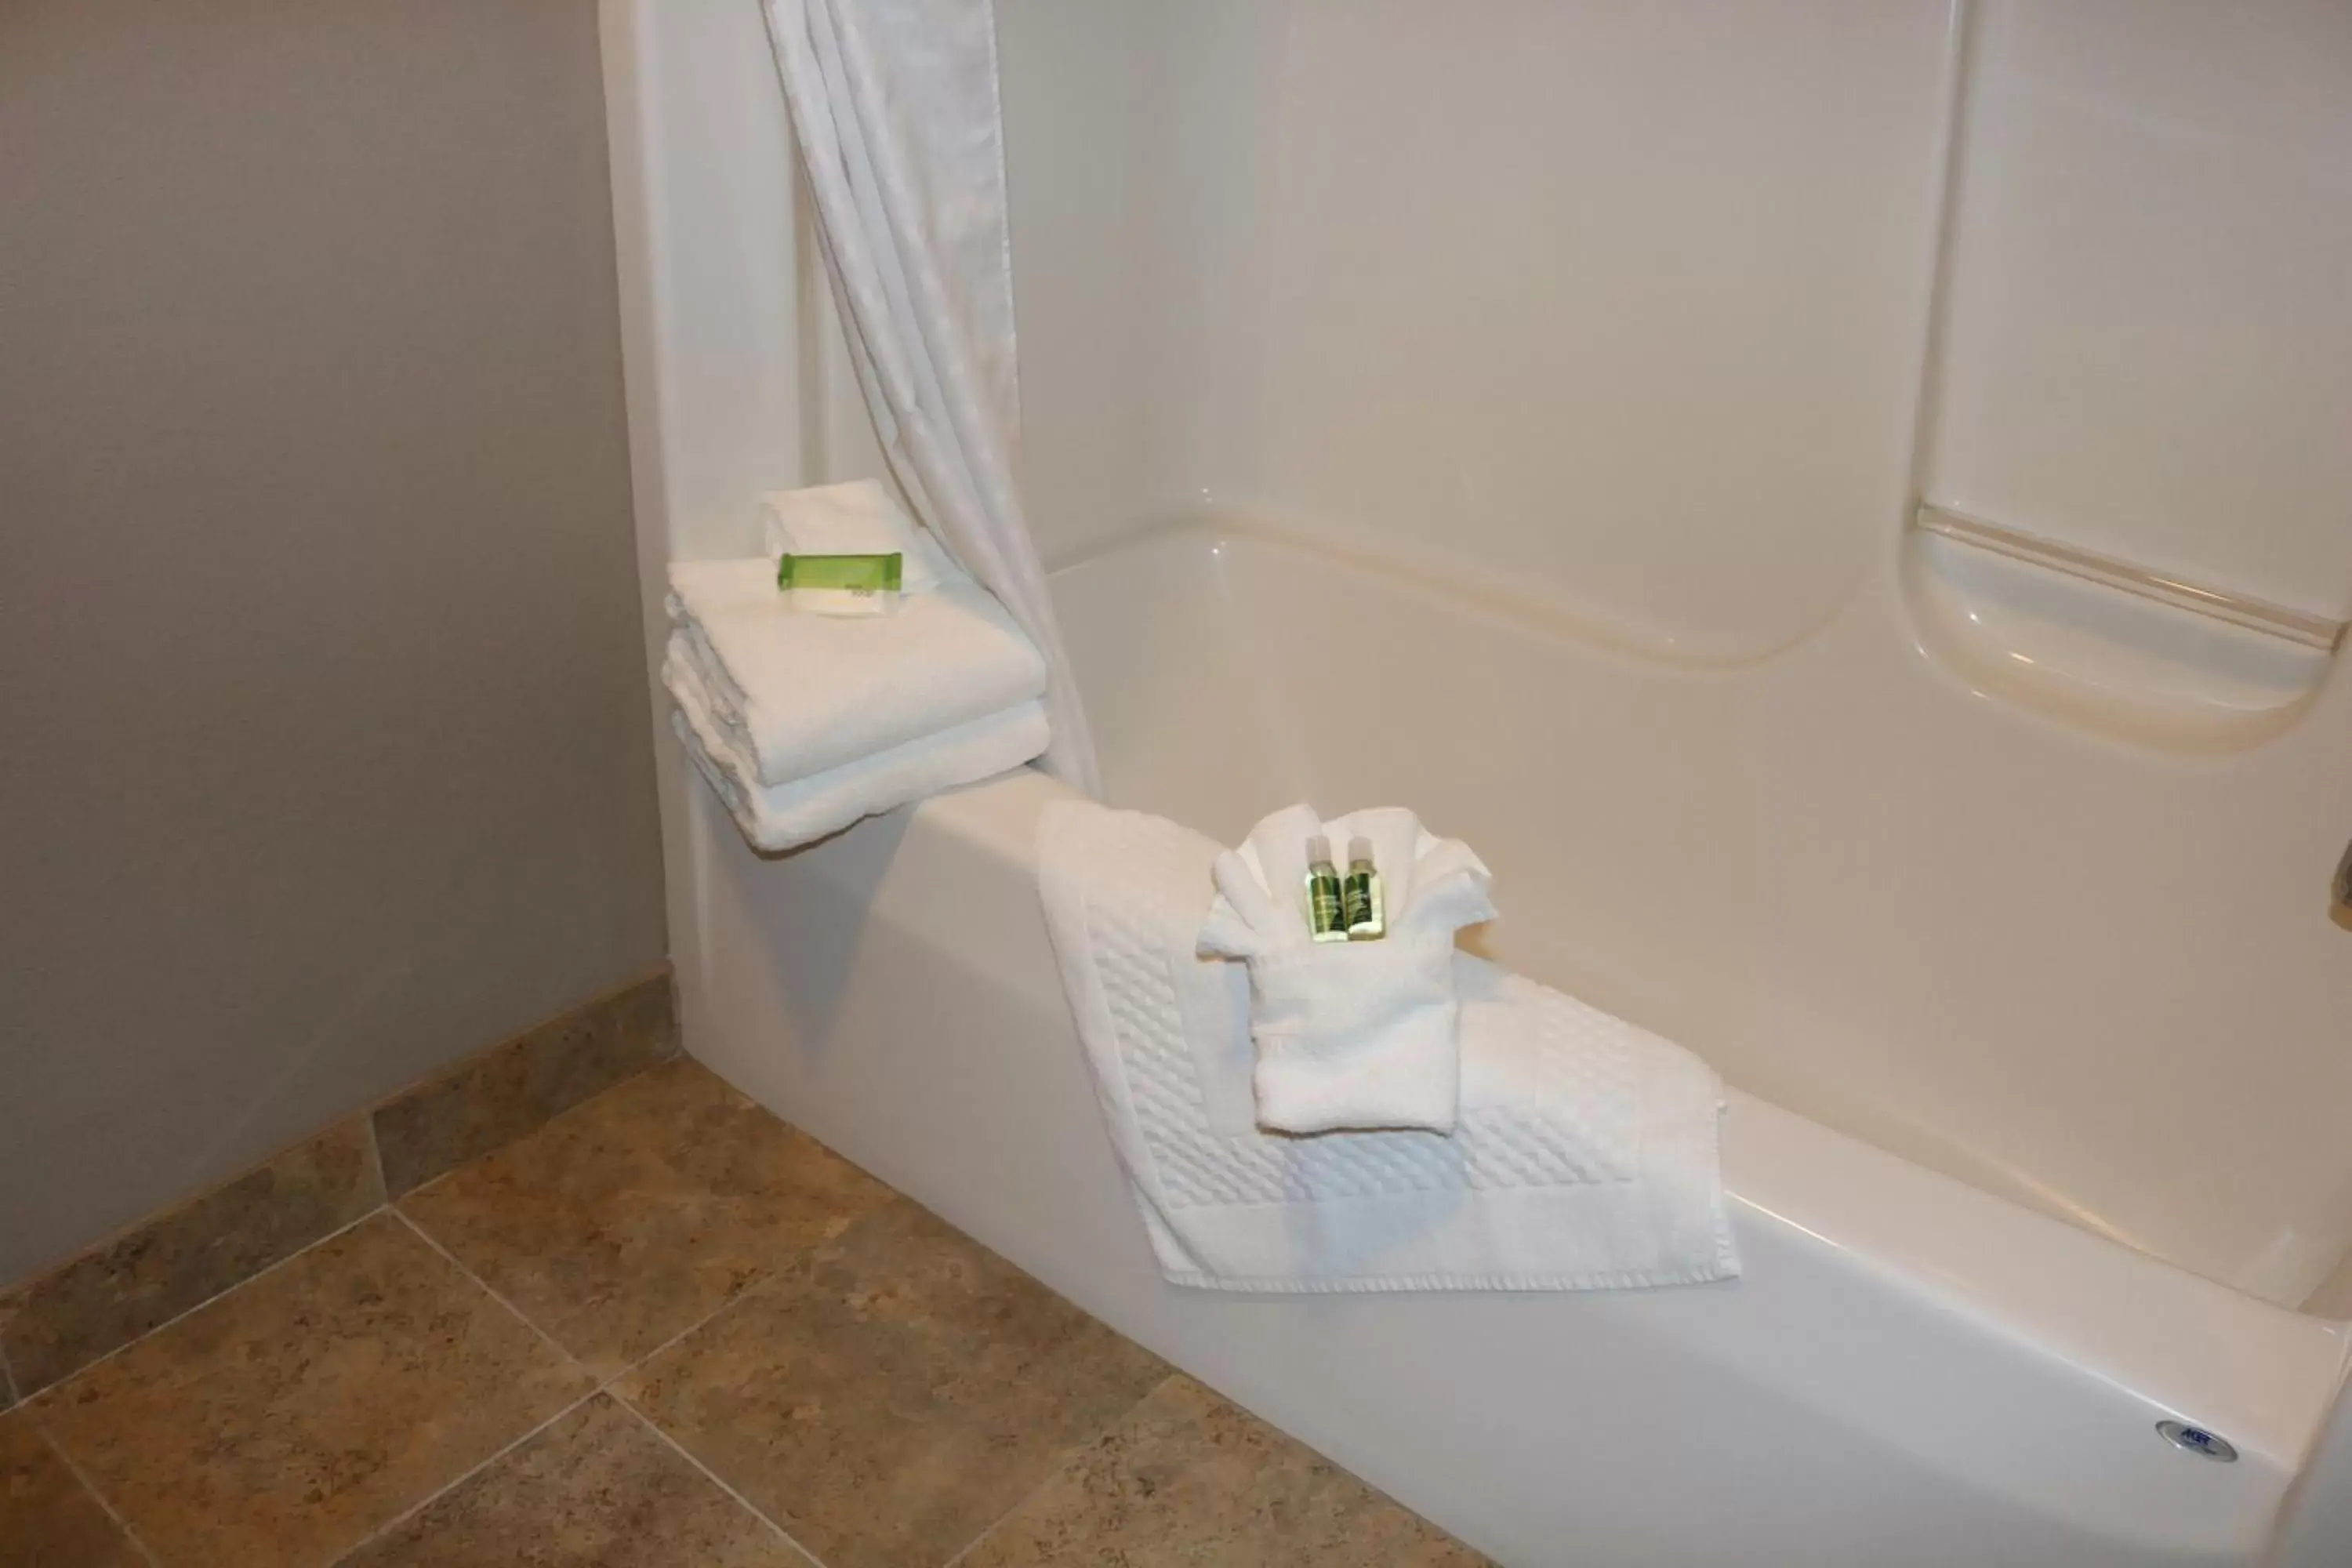 Bathroom in Qube Hotel - Polk City